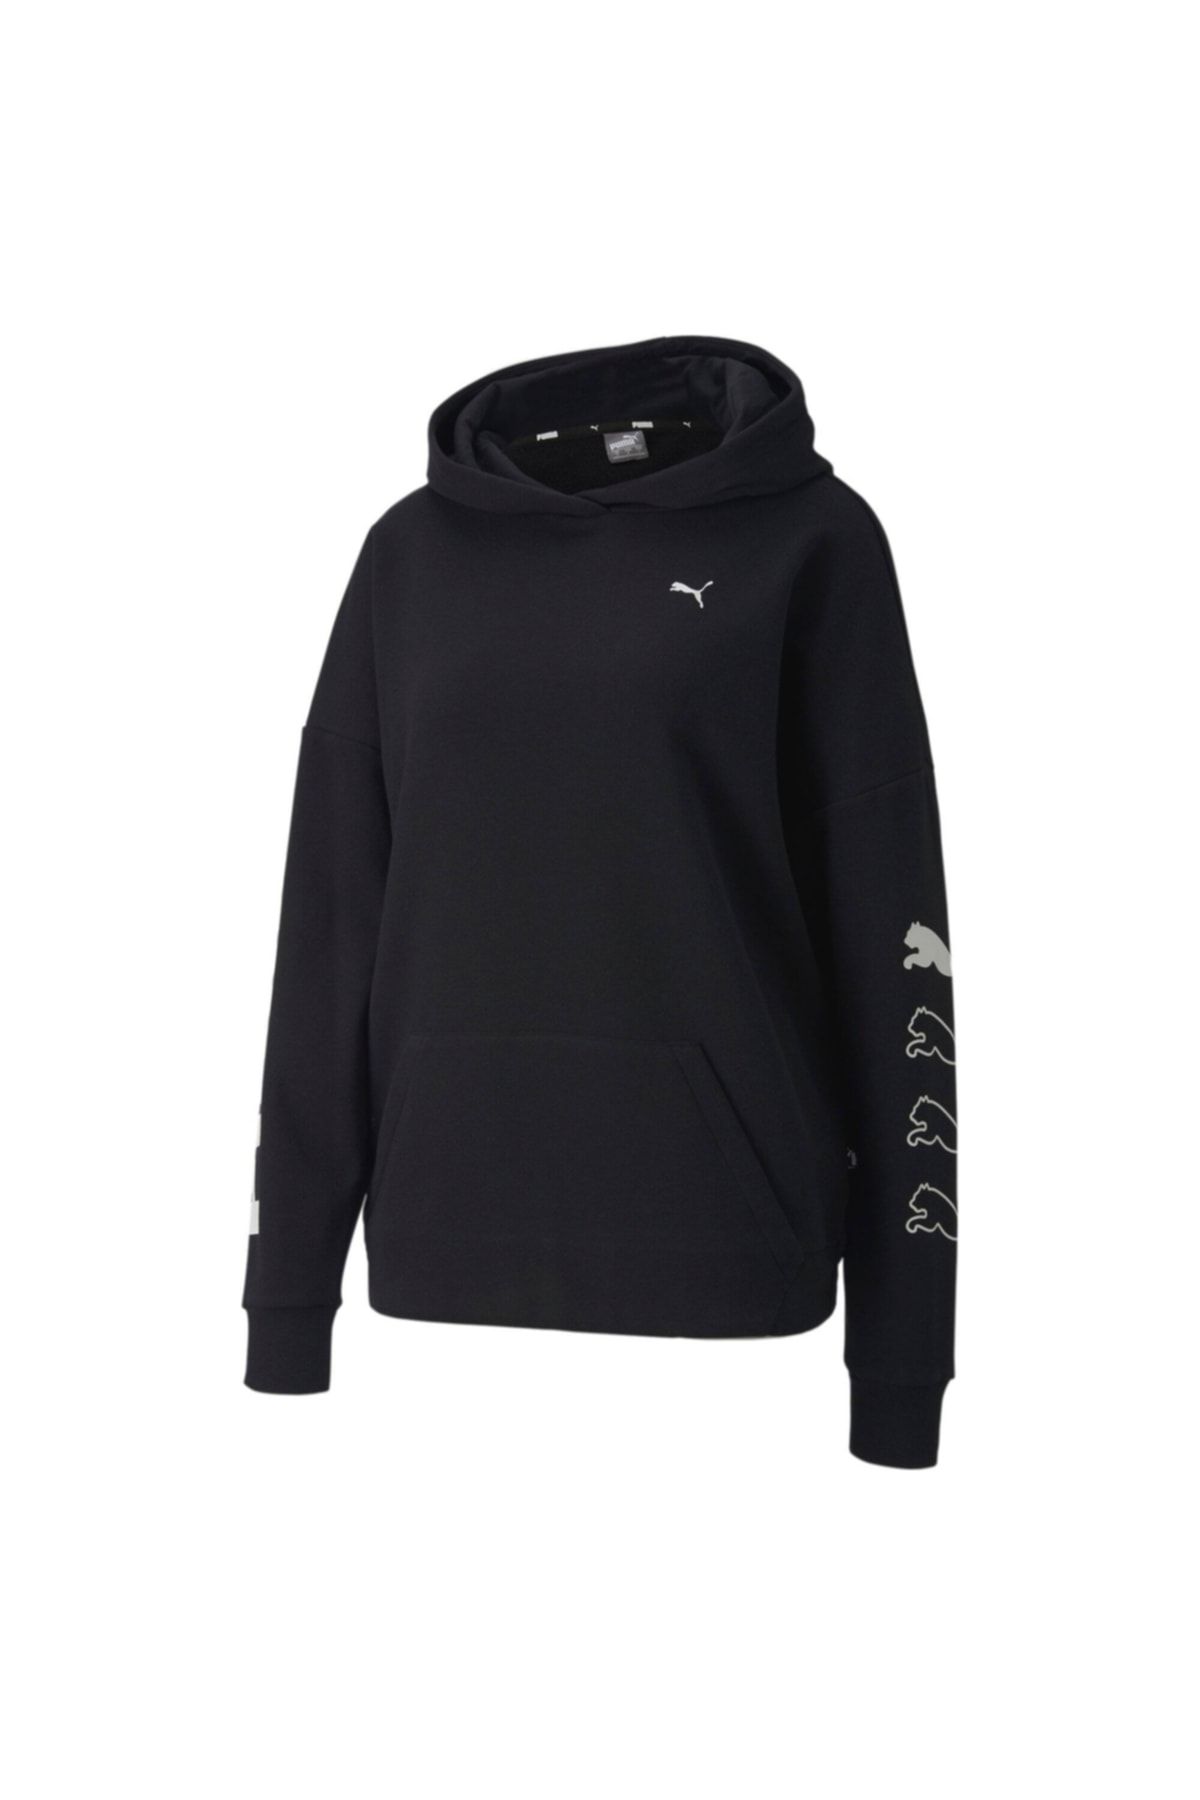 Puma Kadın Spor Sweatshirt - REBEL - 58130901